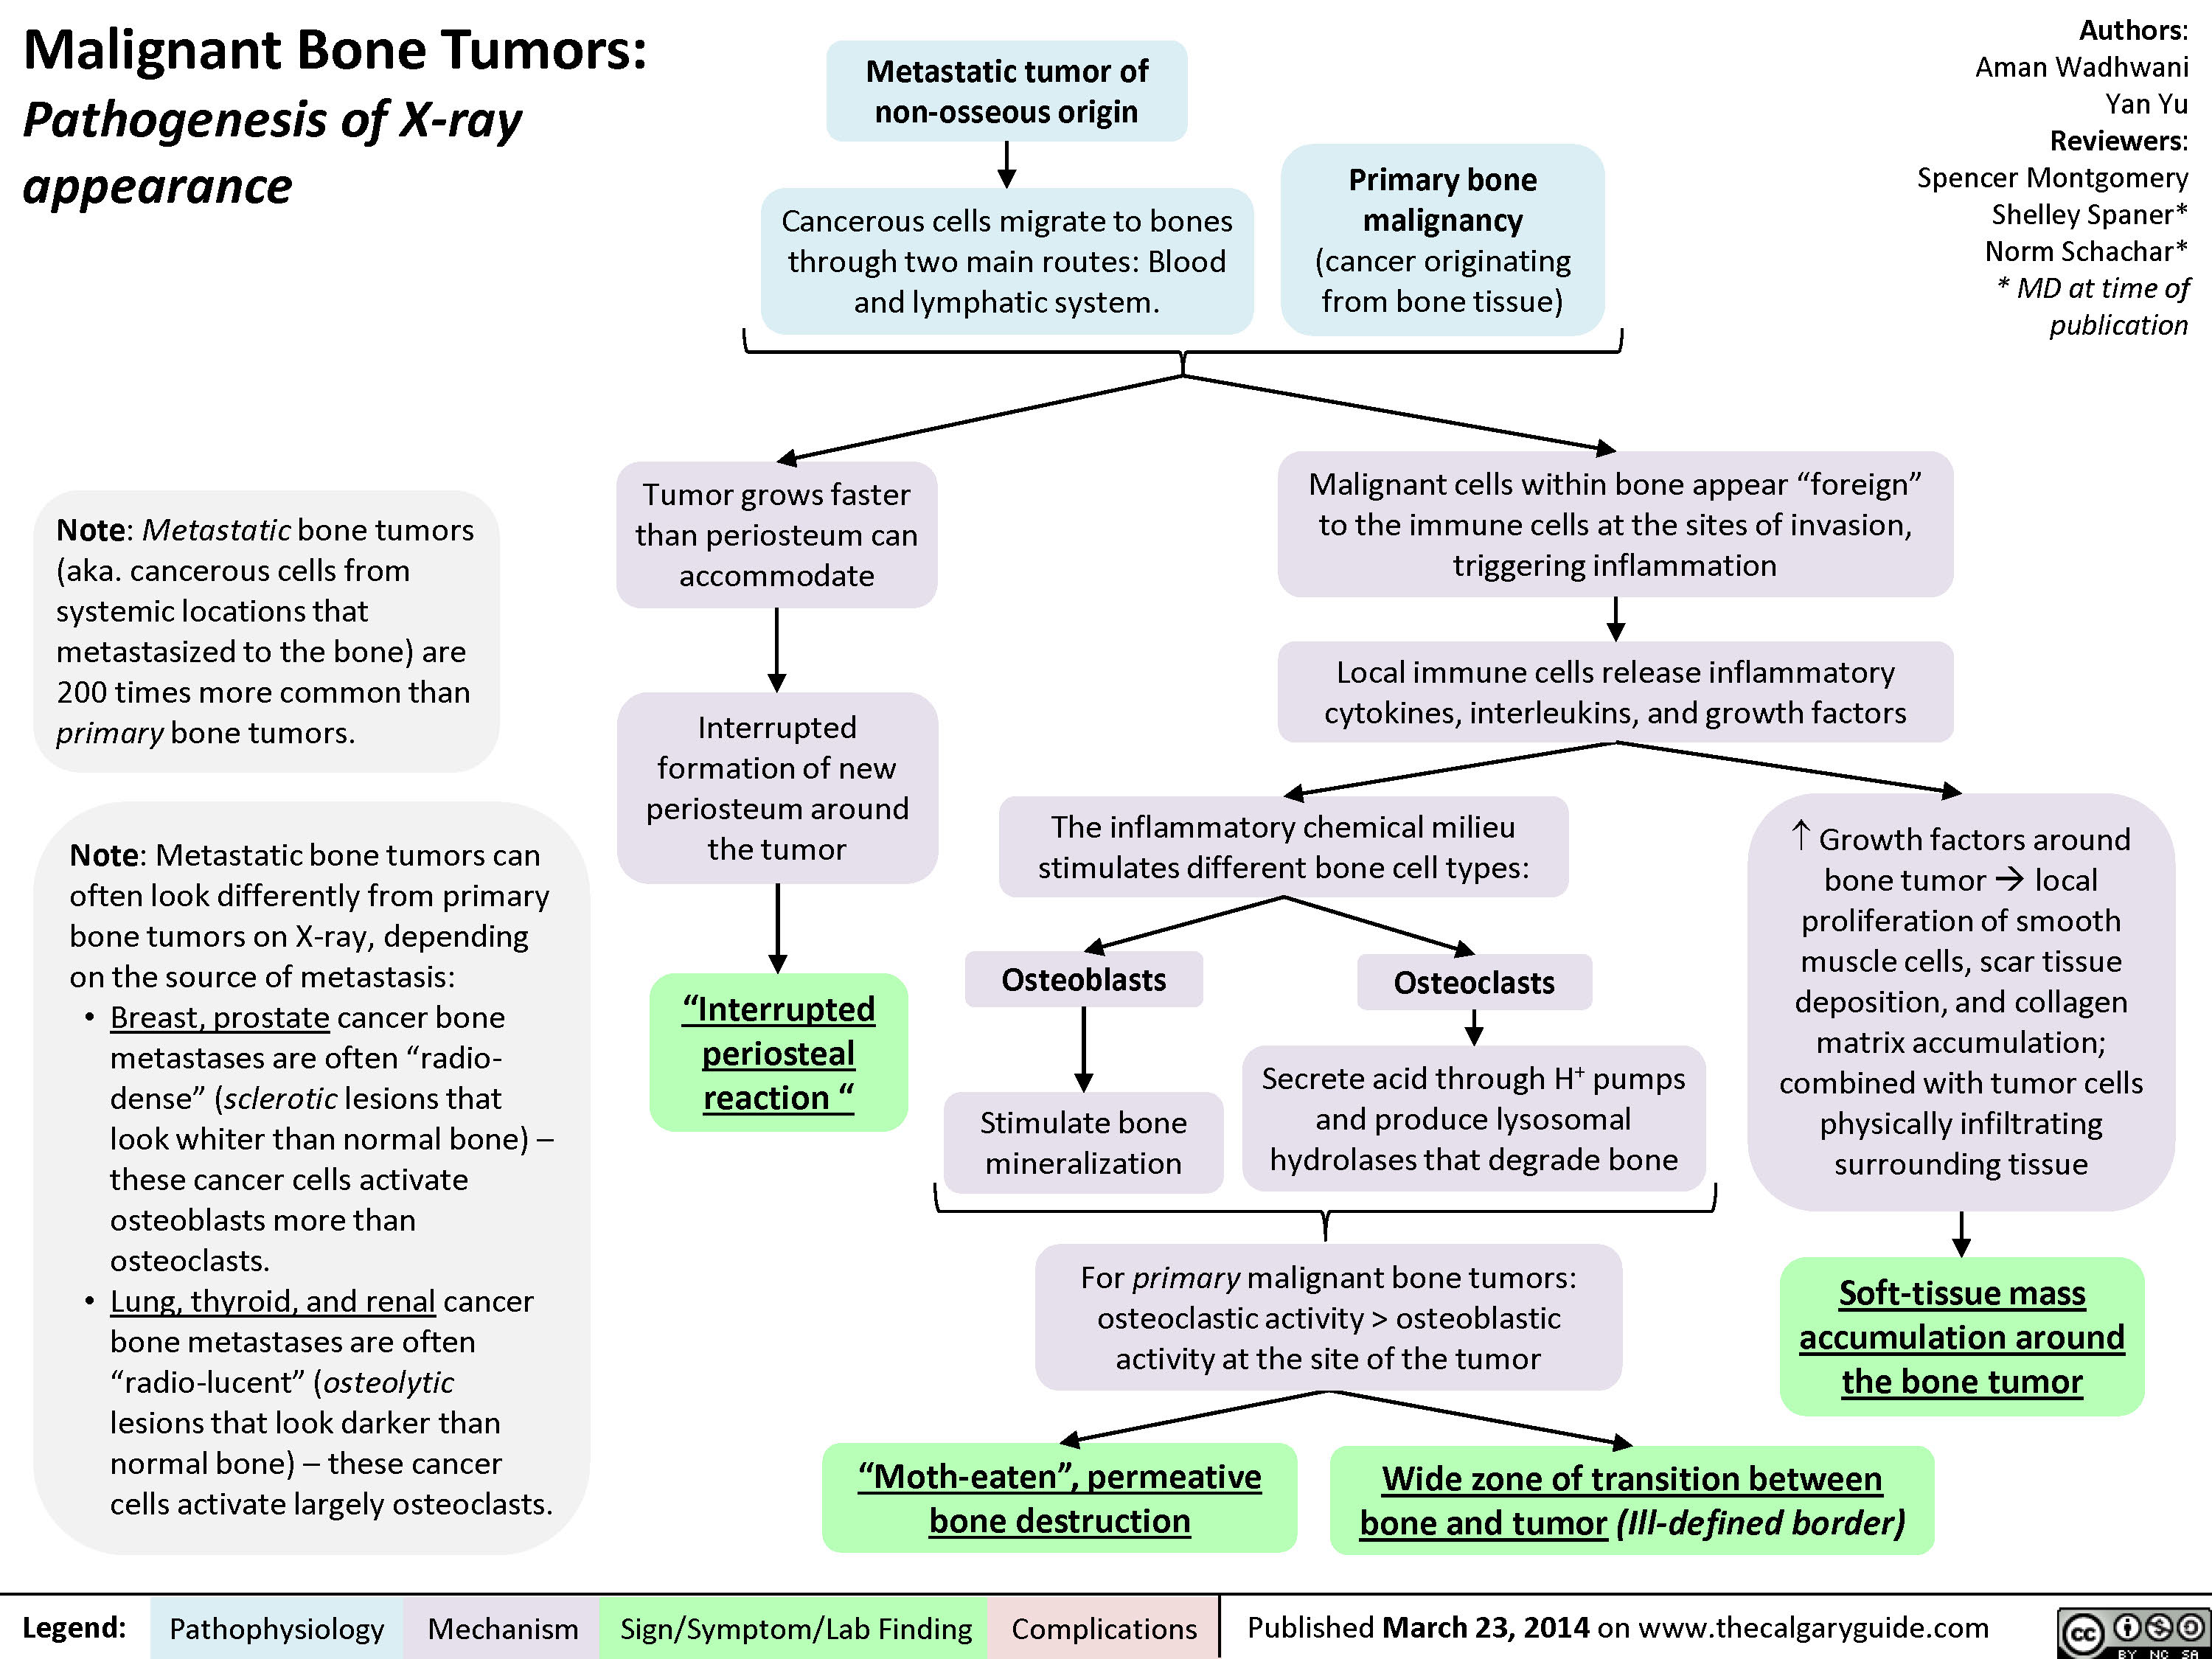 Malignant Bone Tumors - Pathogenesis of X-ray appearance